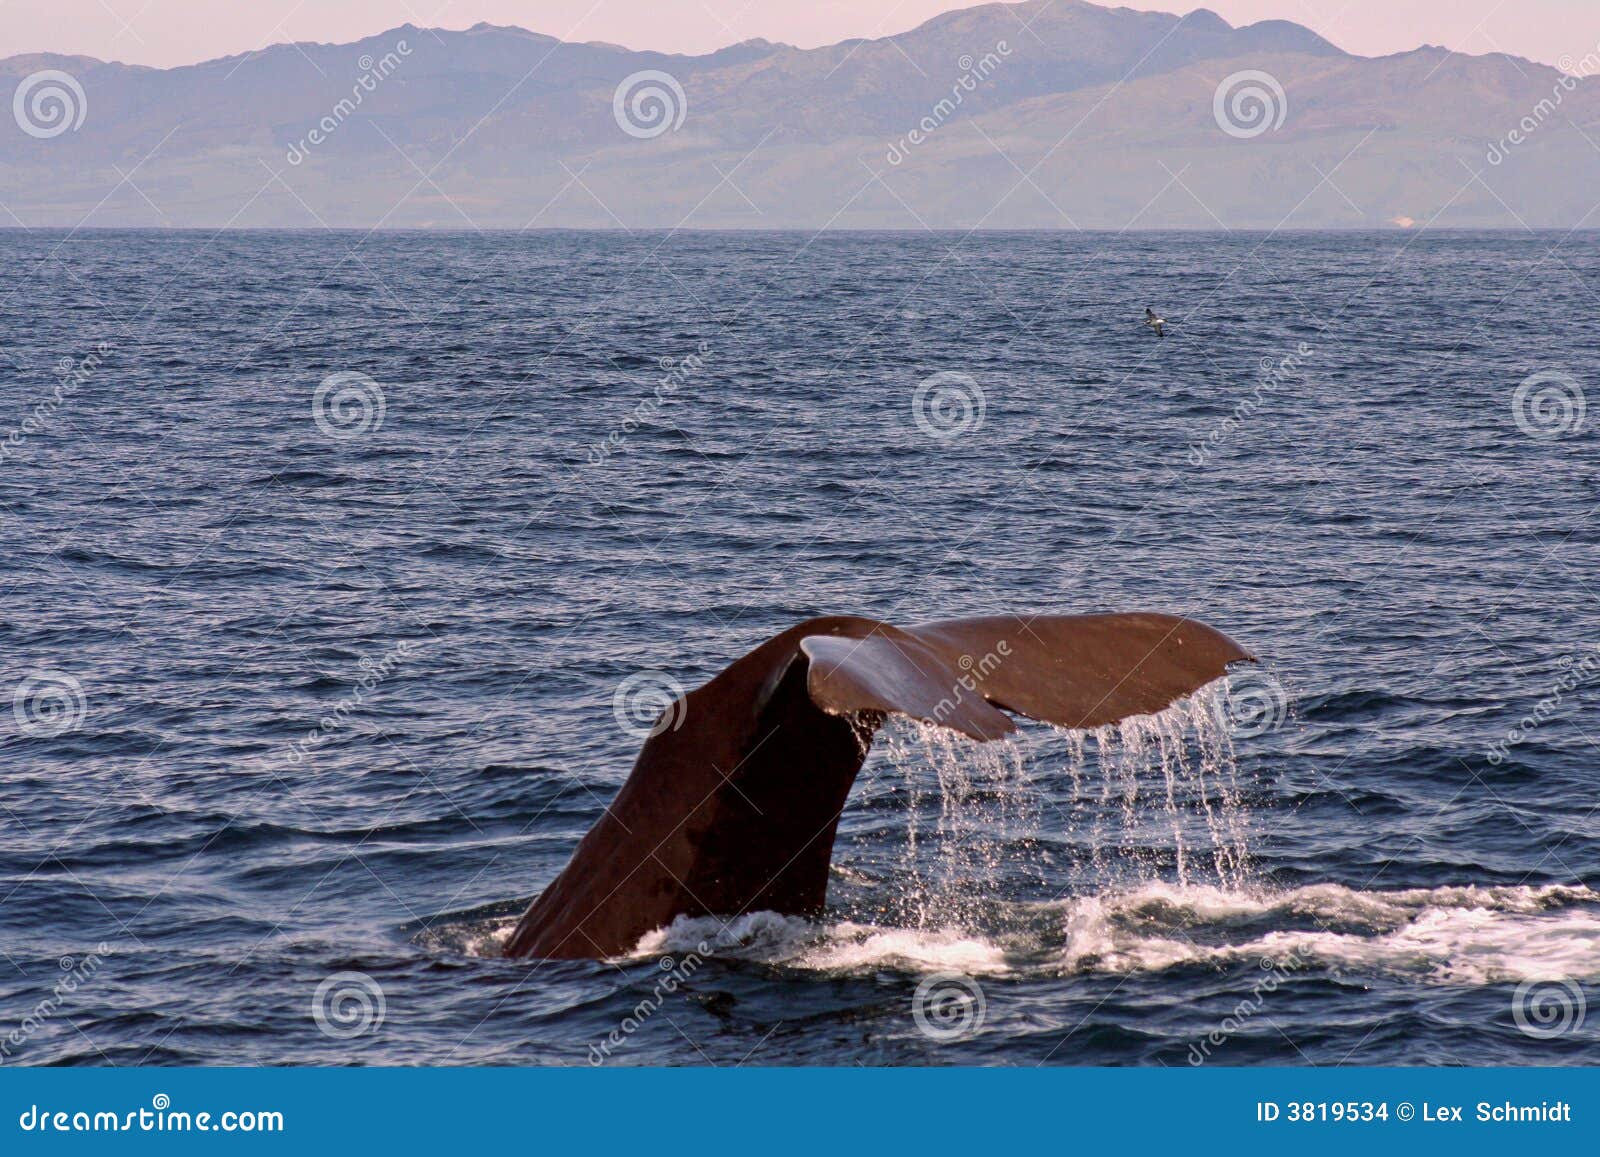 diving sperm whale